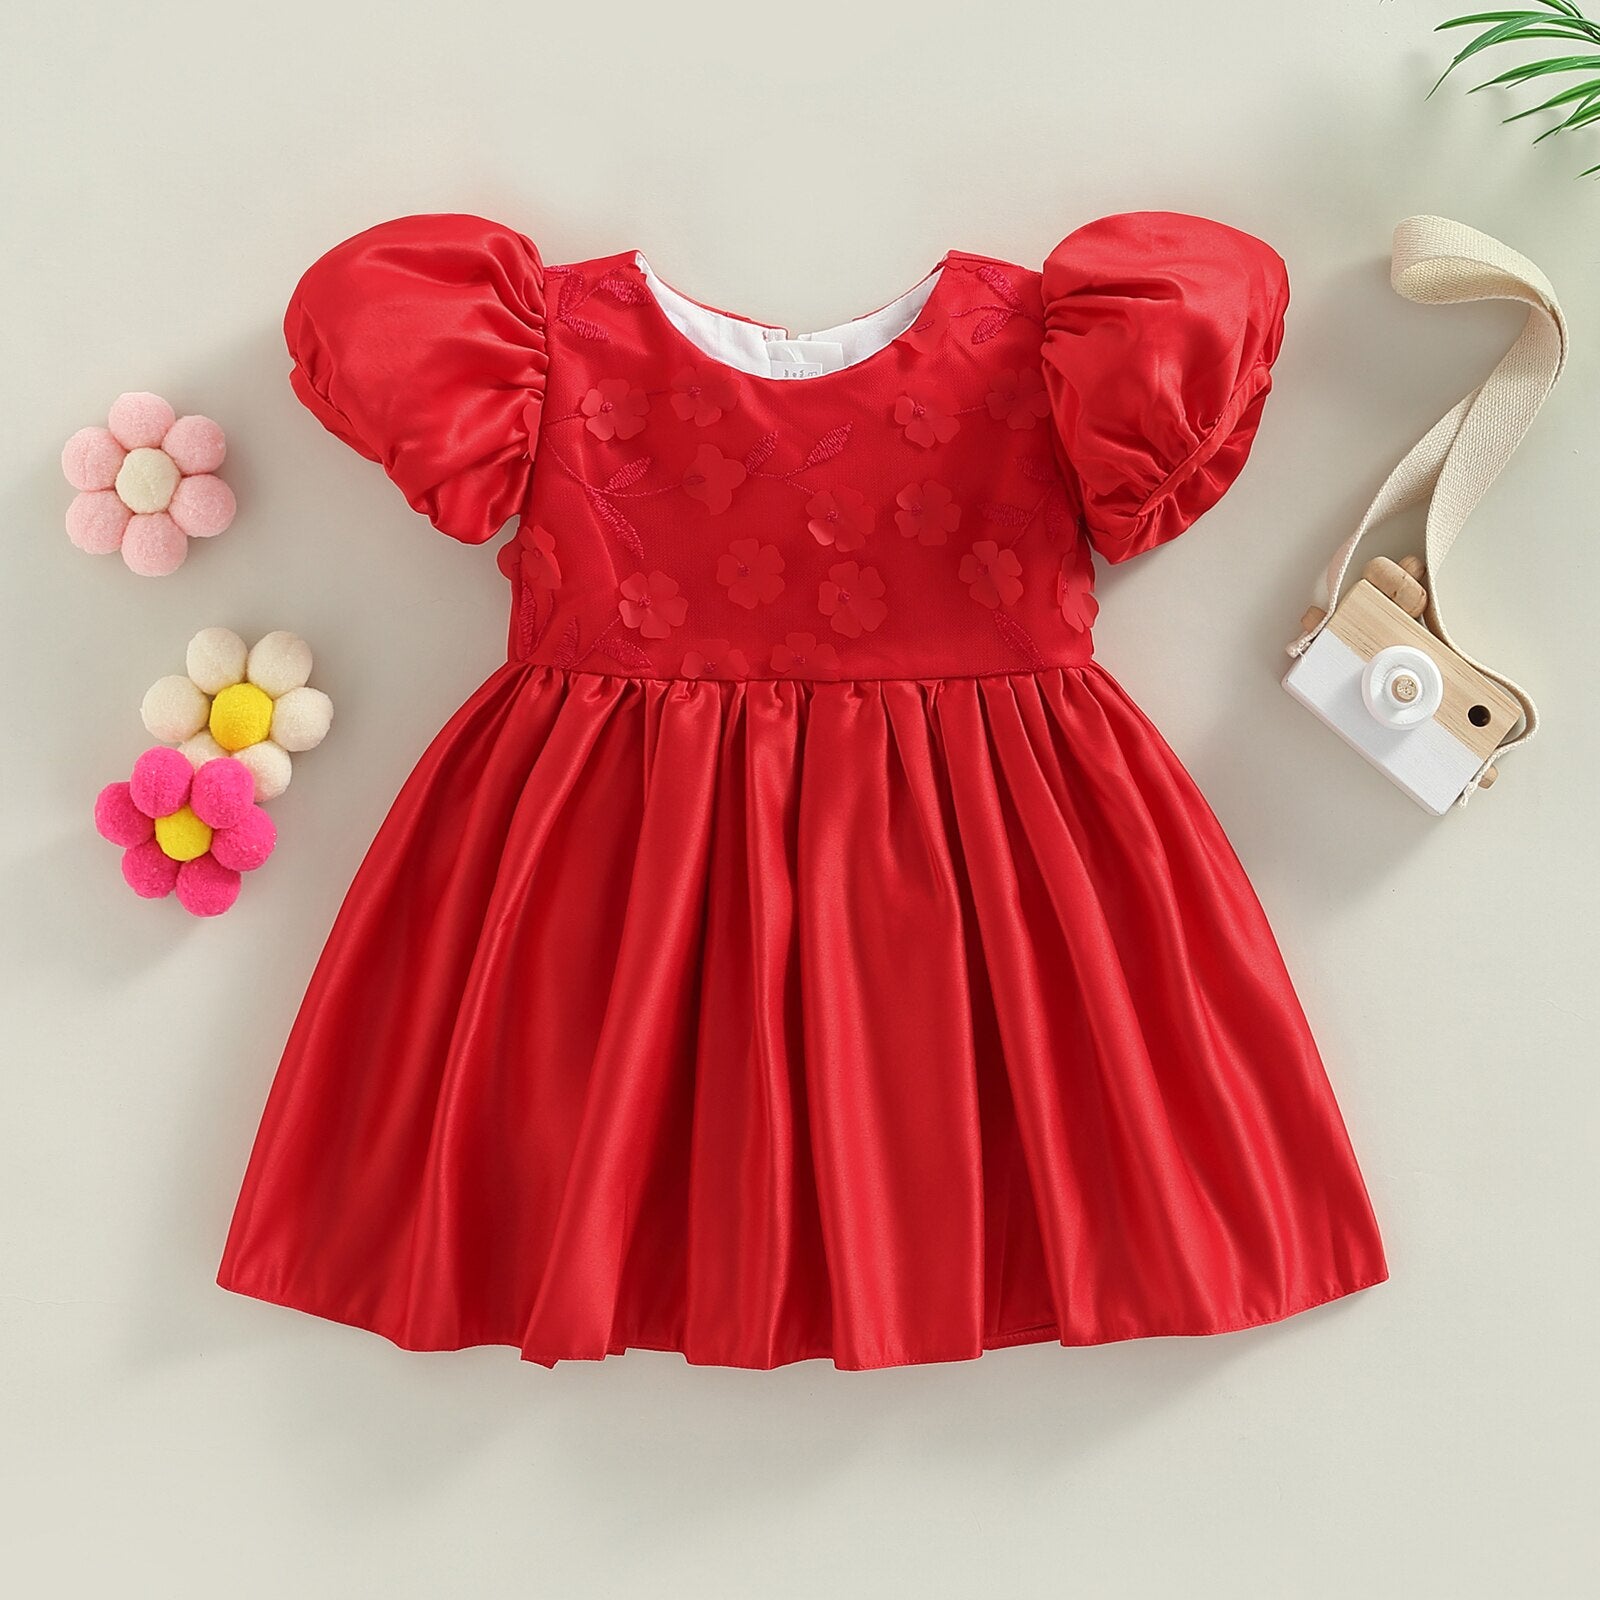 Vestido Infantil Princesa vestido Loja Click Certo Vermelho 2-3 anos 57cm 